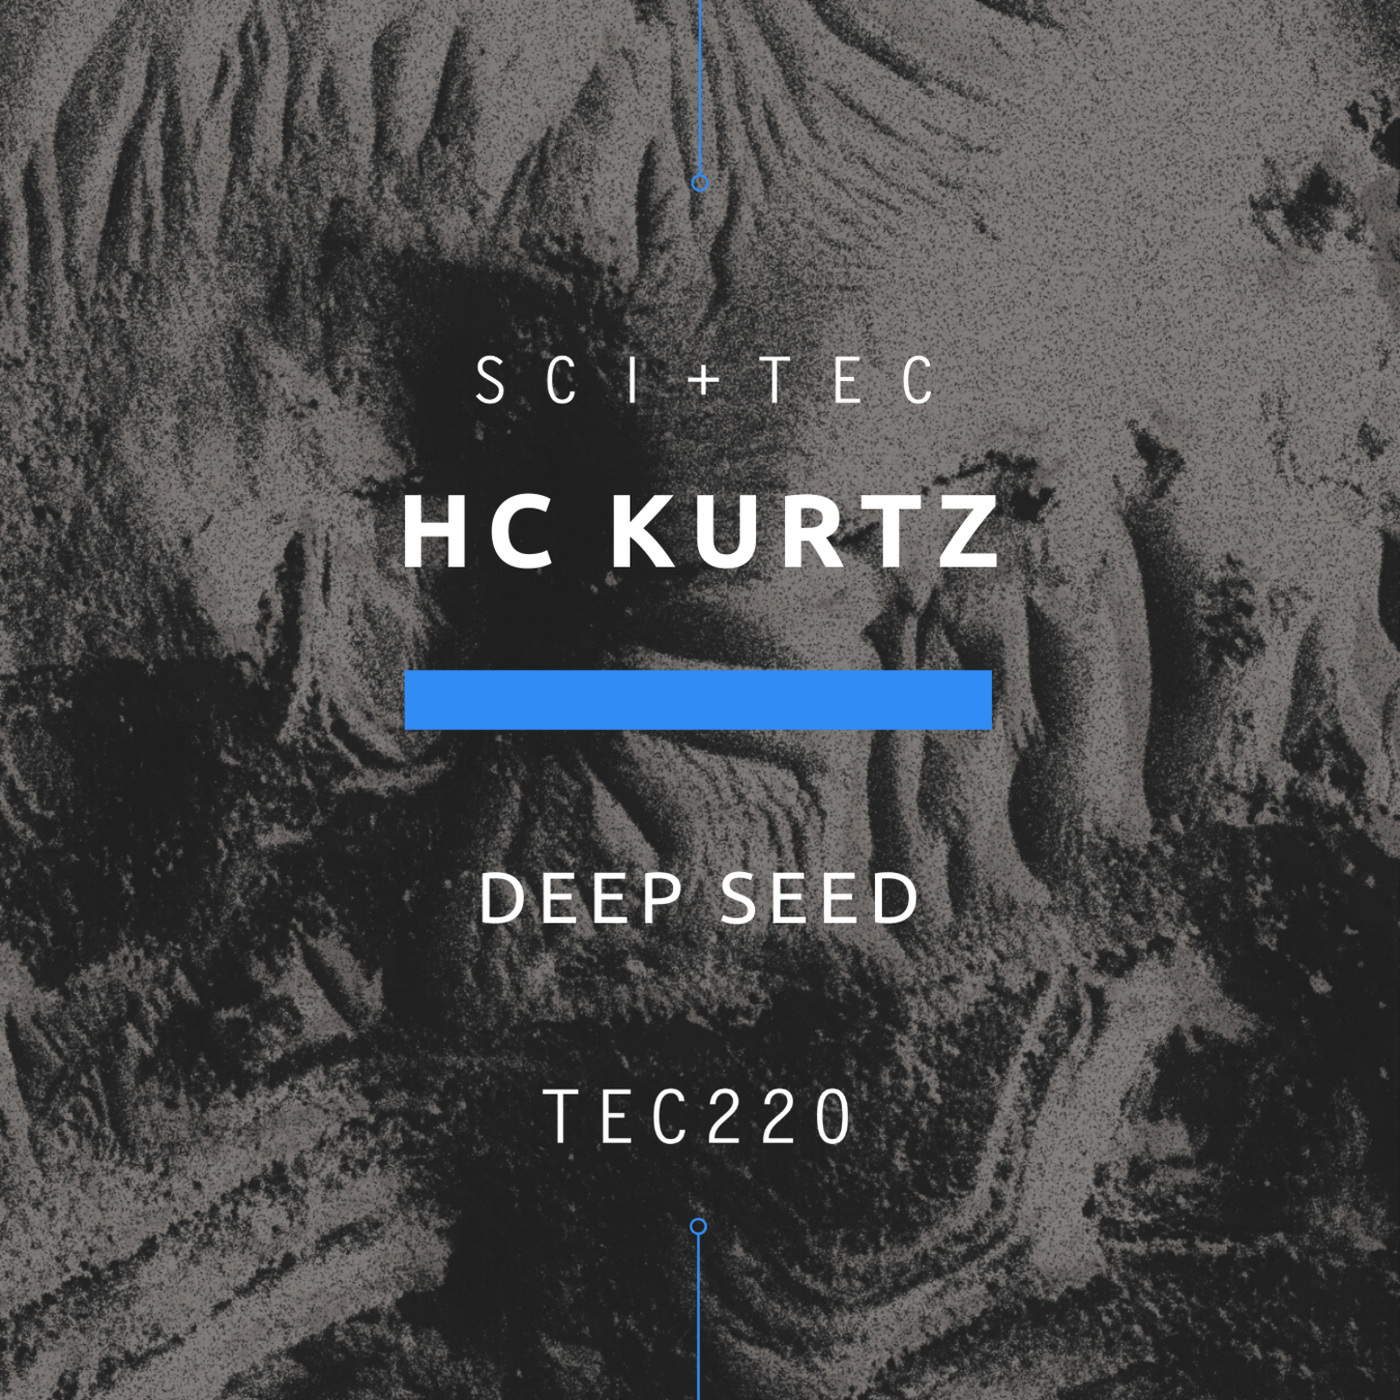 Download Hc Kurtz - Deep Seed on Electrobuzz